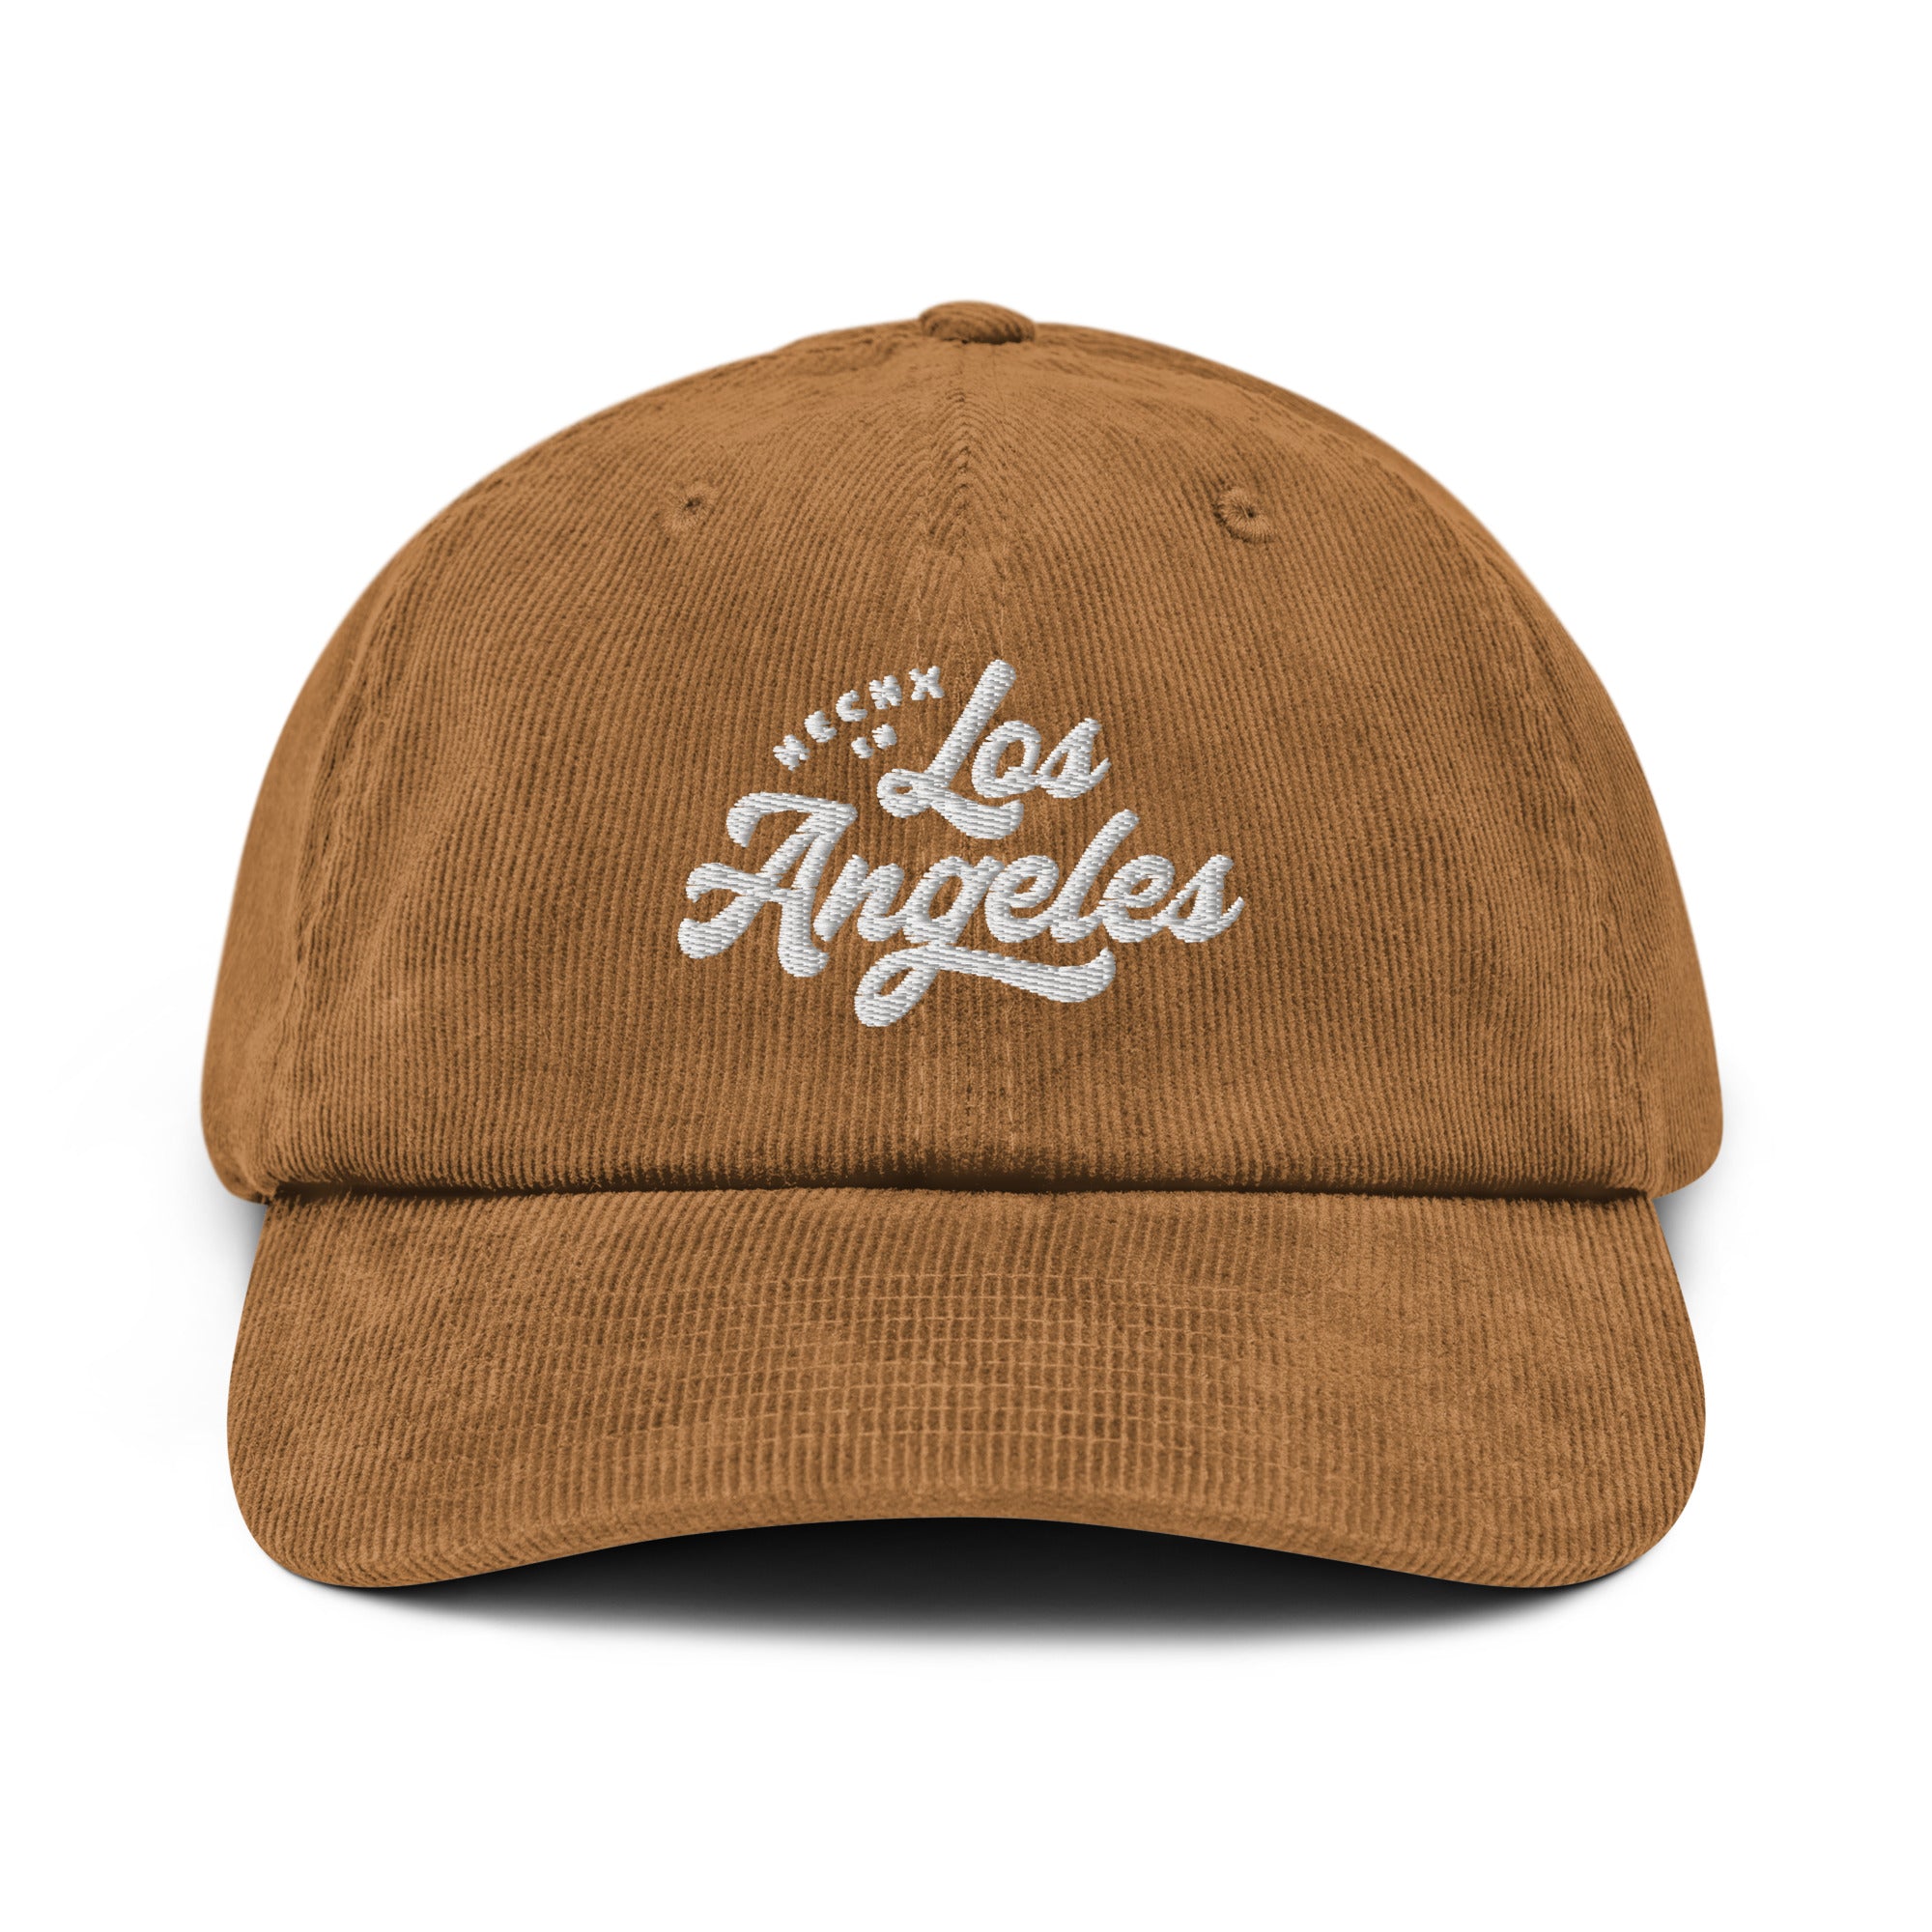 Hechx En Los Angeles Corduroy hat